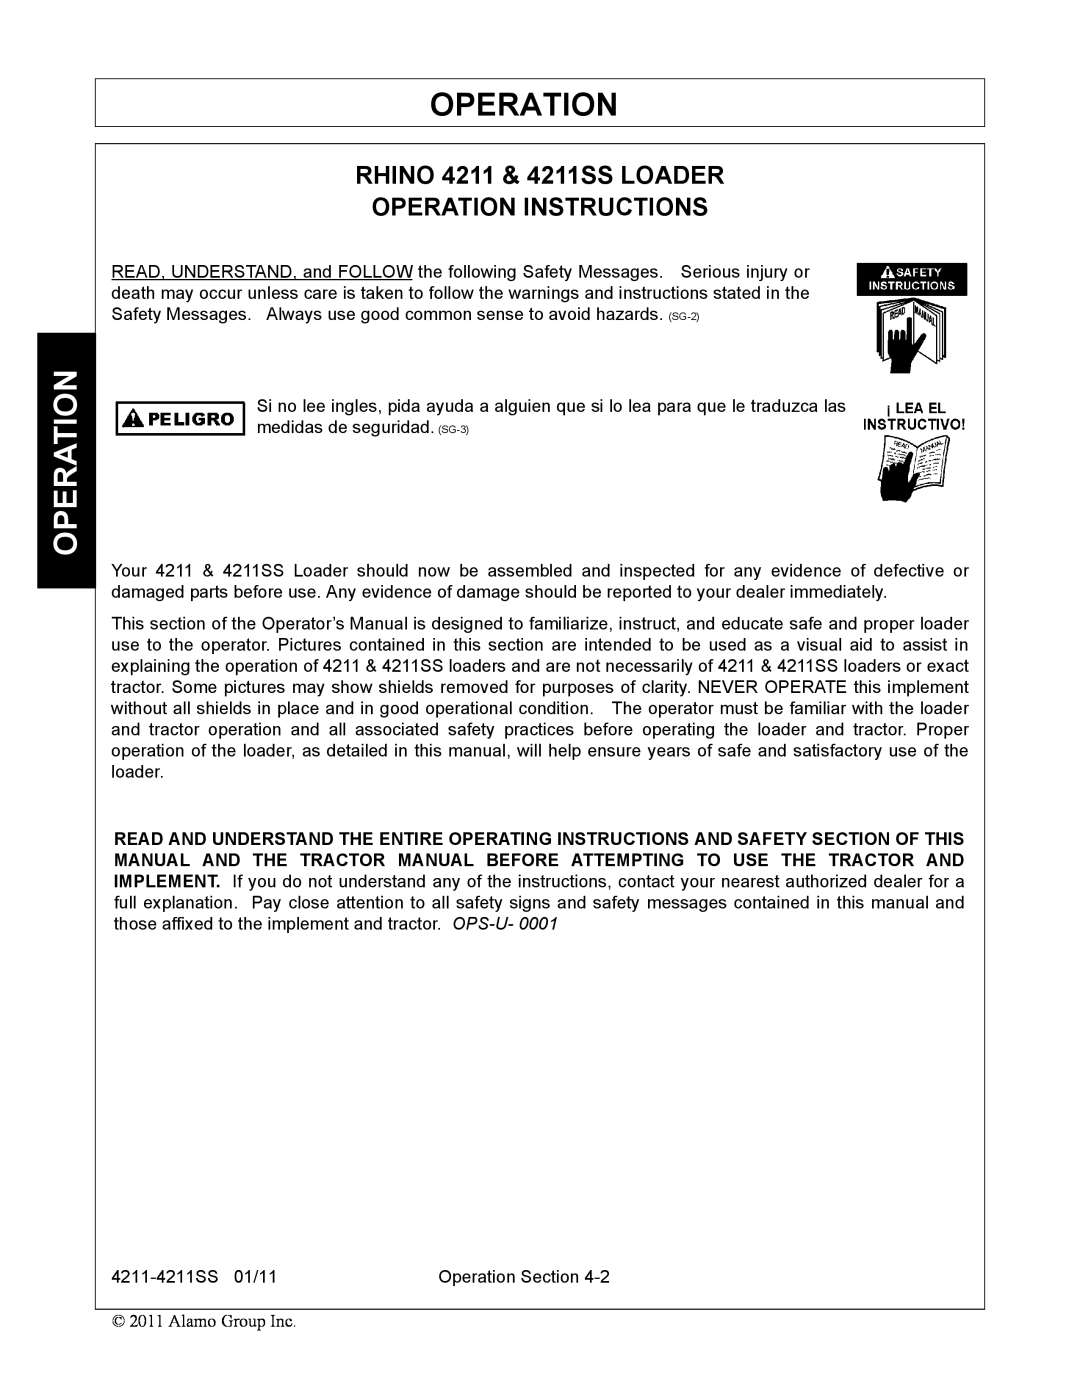 Servis-Rhino manual Operation, RHINO 4211 & 4211SS LOADER OPERATION INSTRUCTIONS 